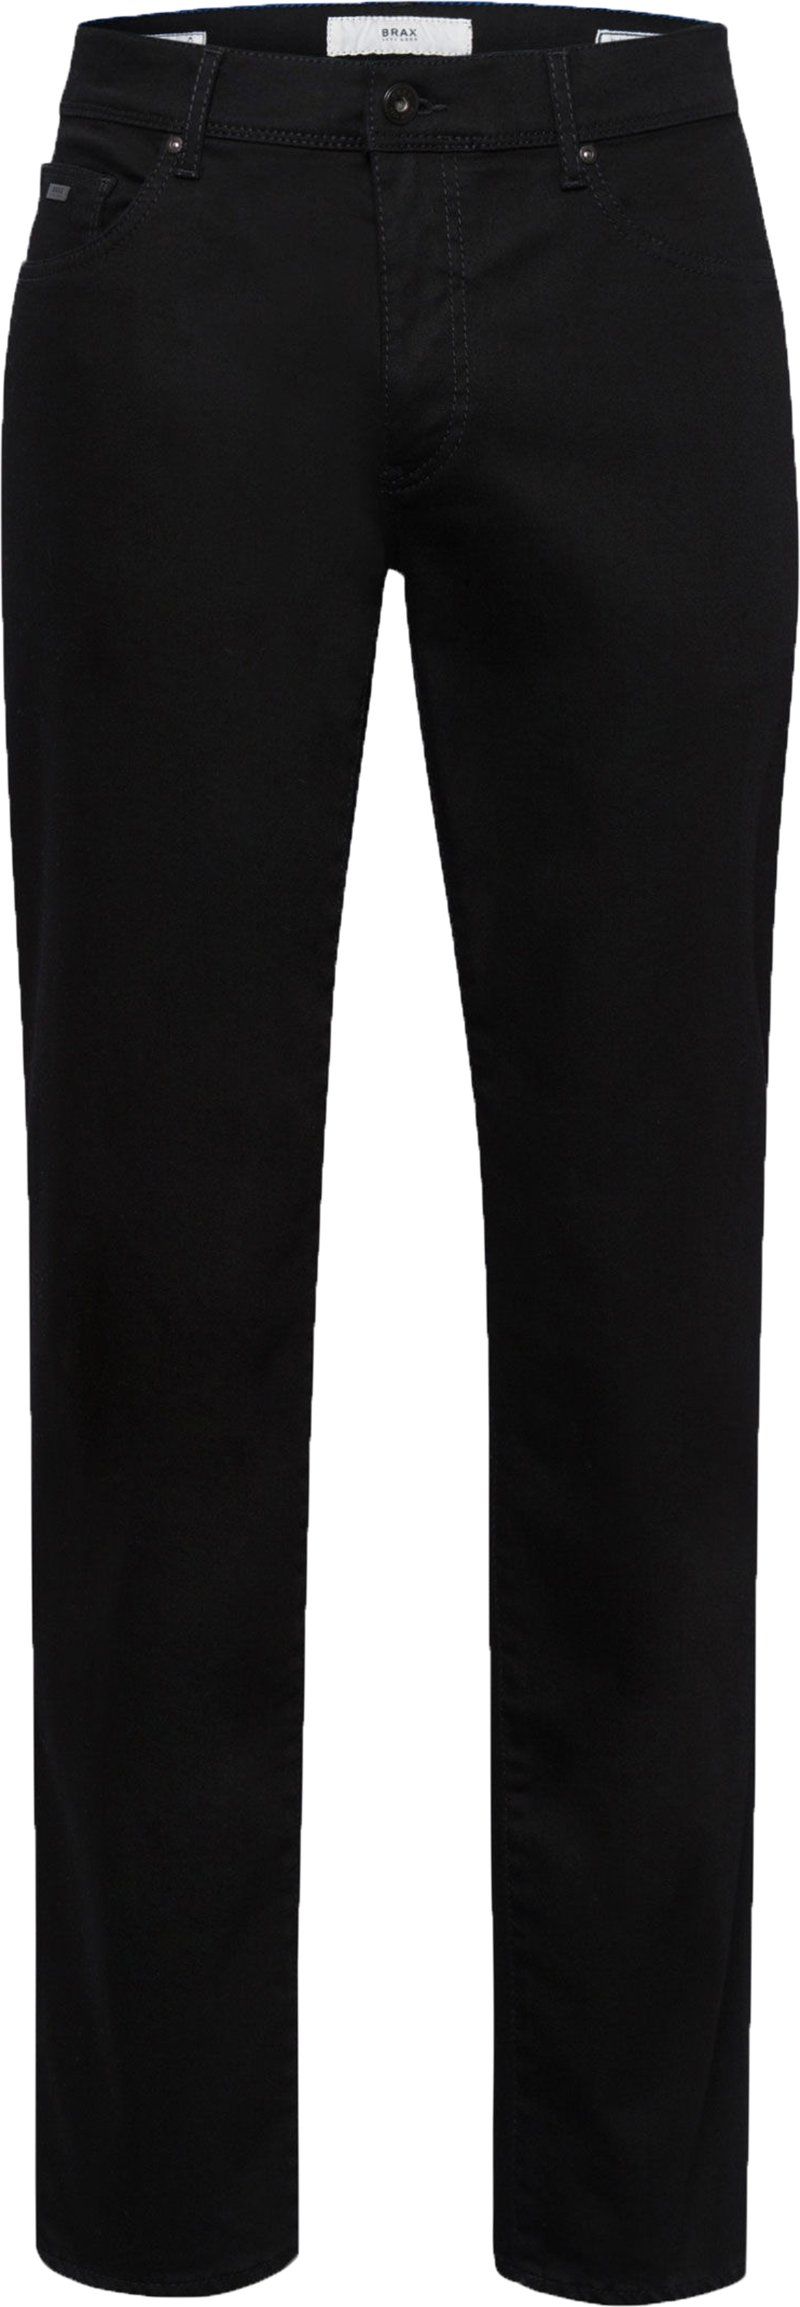 Brax Cadiz Pants Black size W 30 product